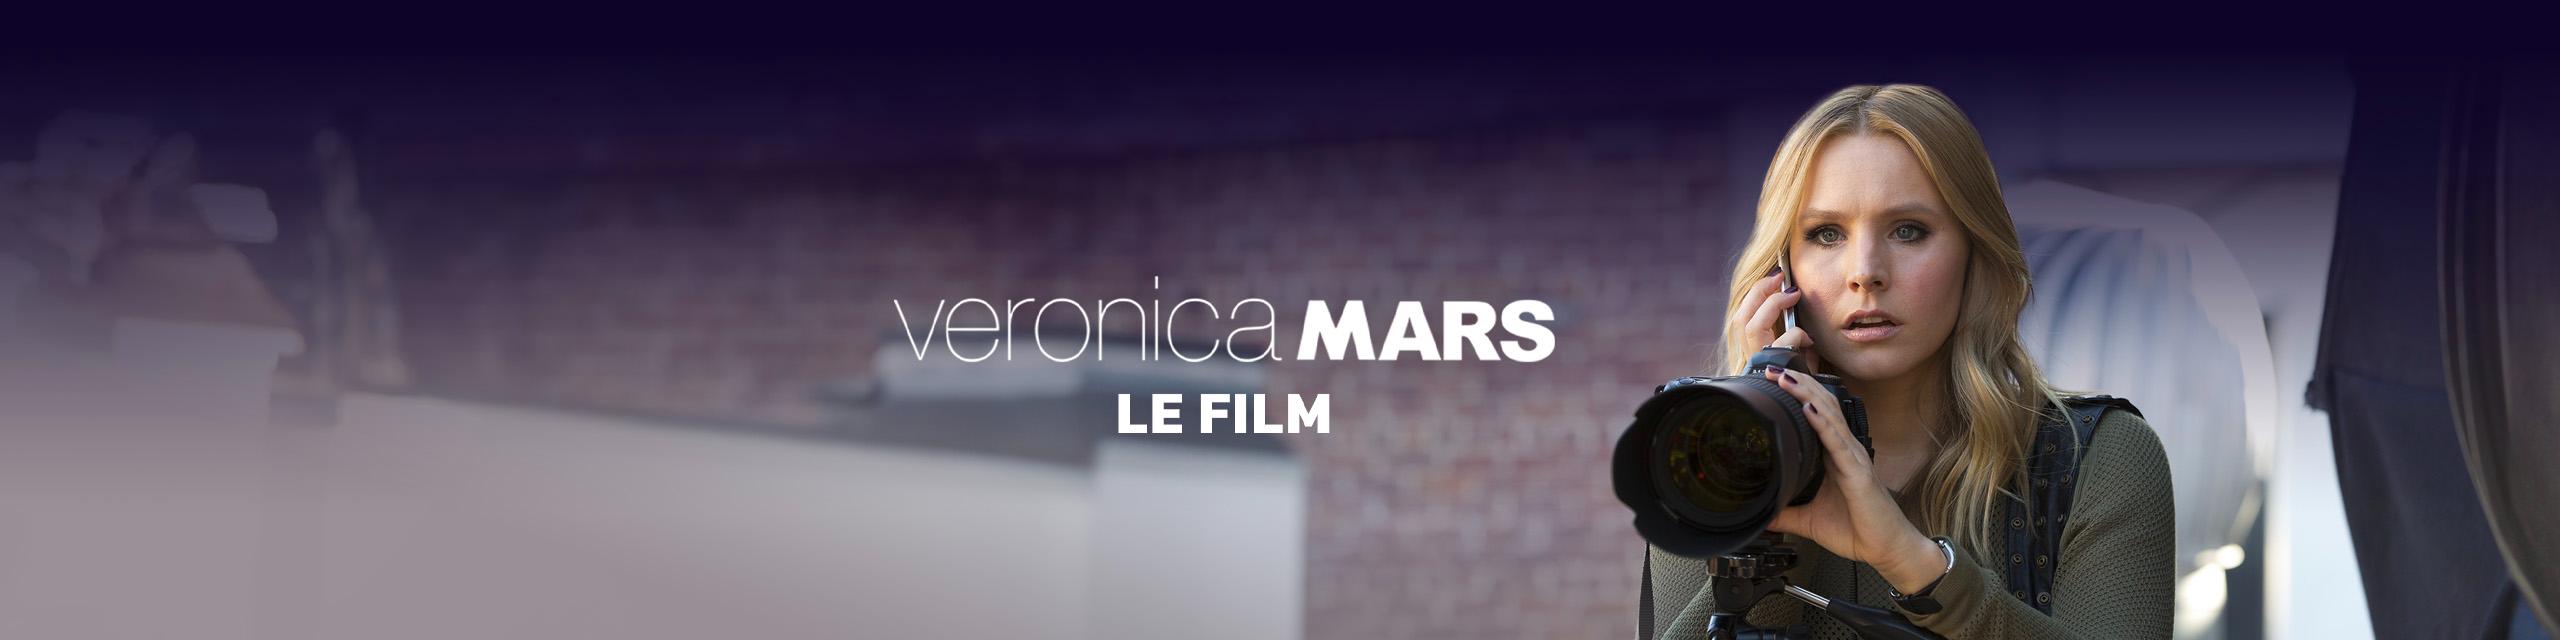 Veronica Mars, le film